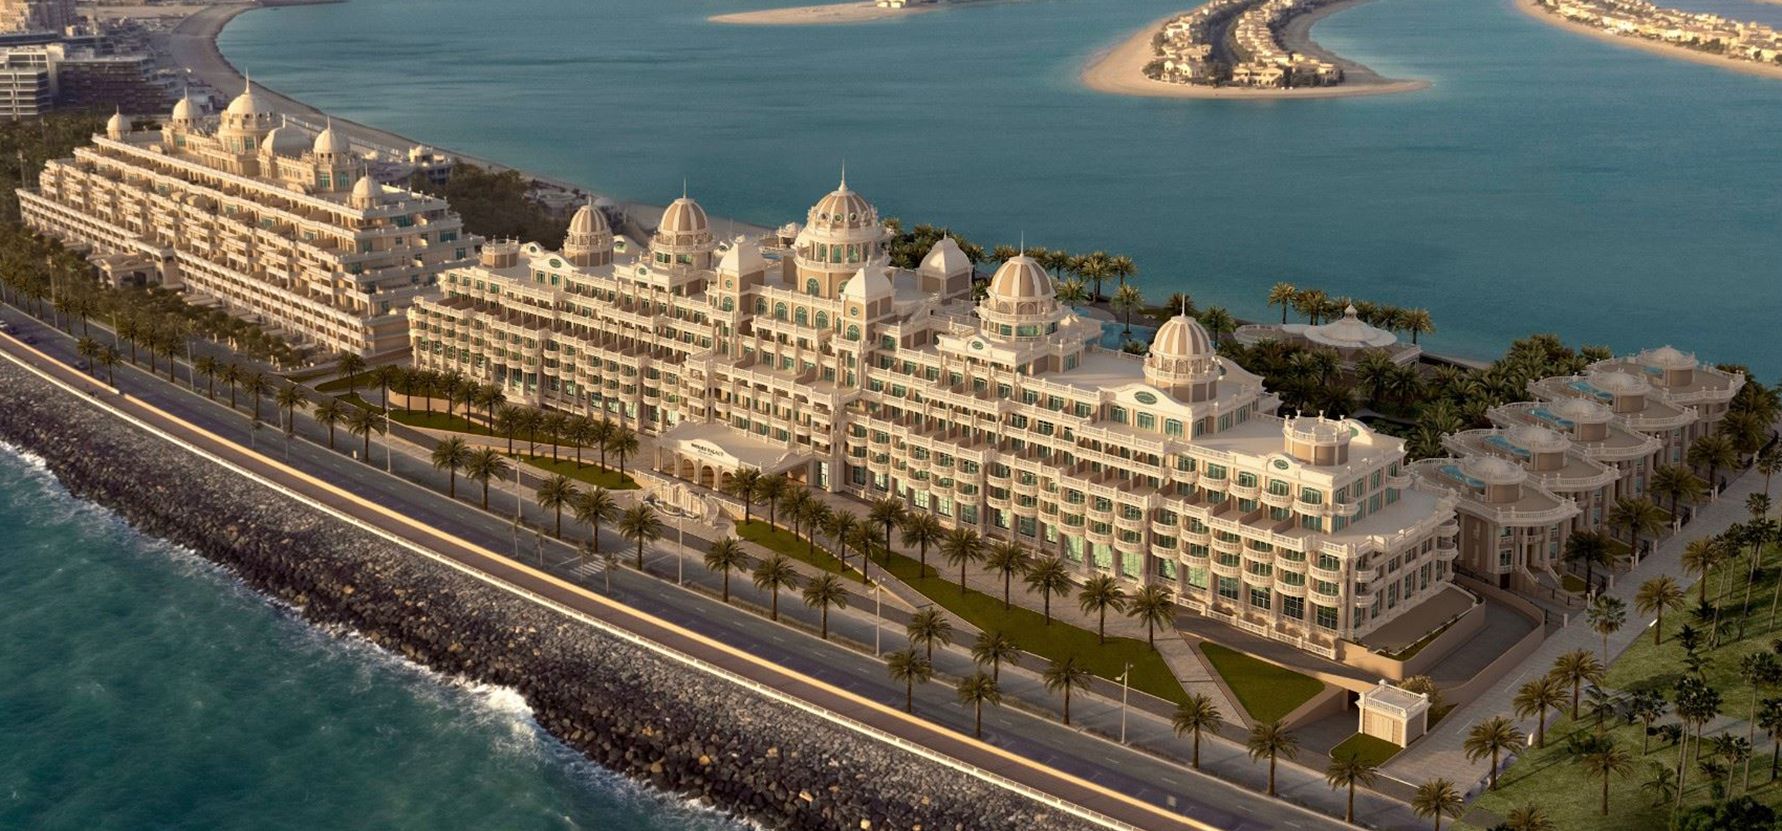 Скидки до 60% от Emerald Palace Kempinski Dubai